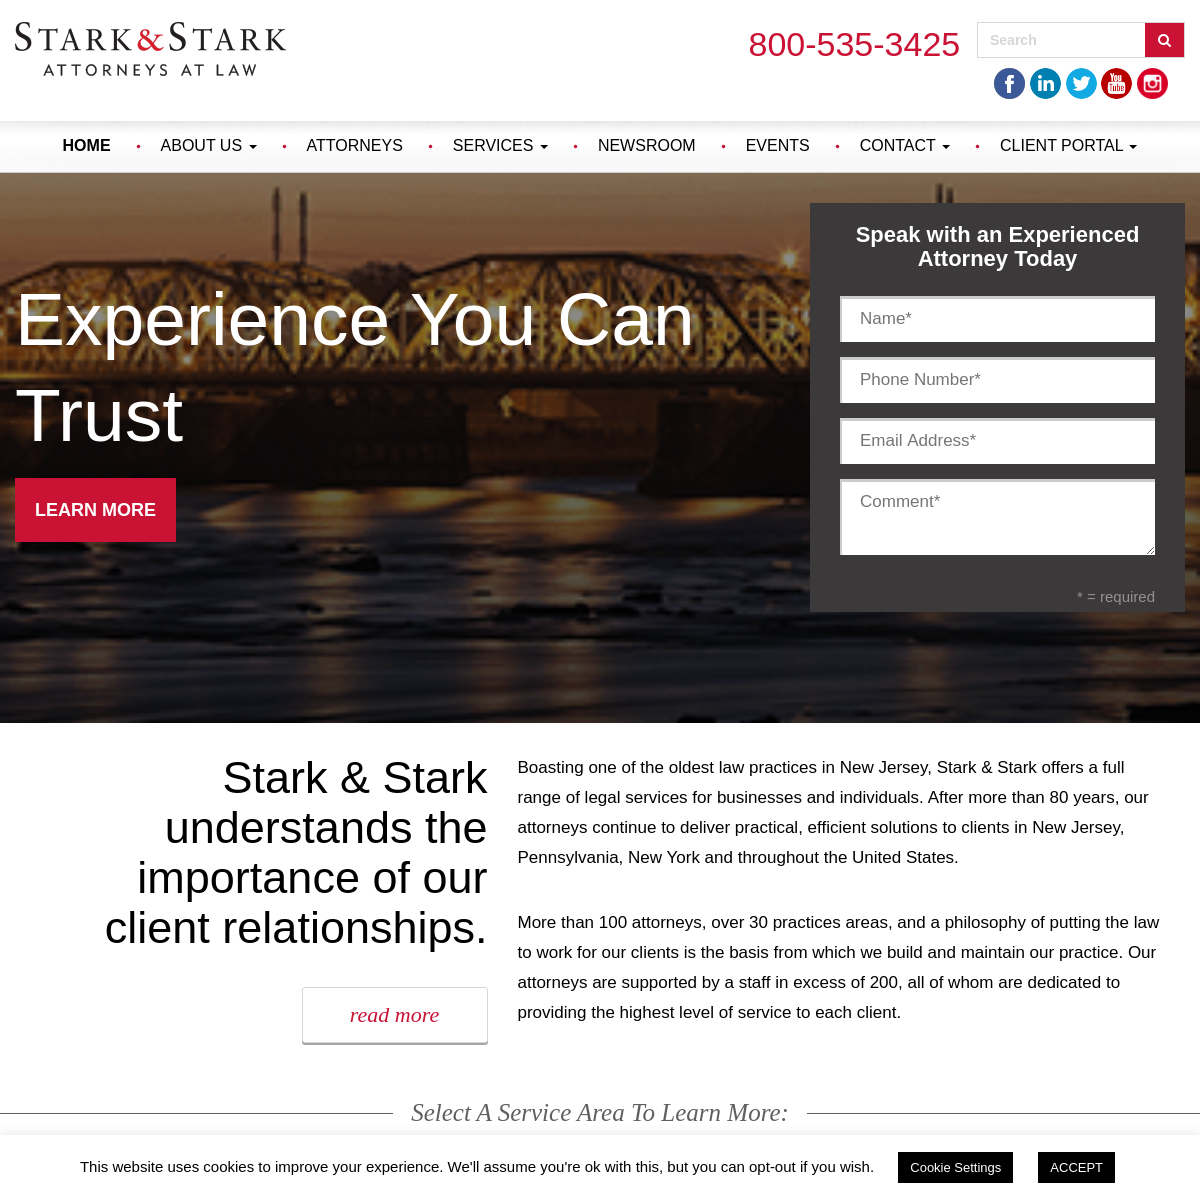 A complete backup of stark-stark.com